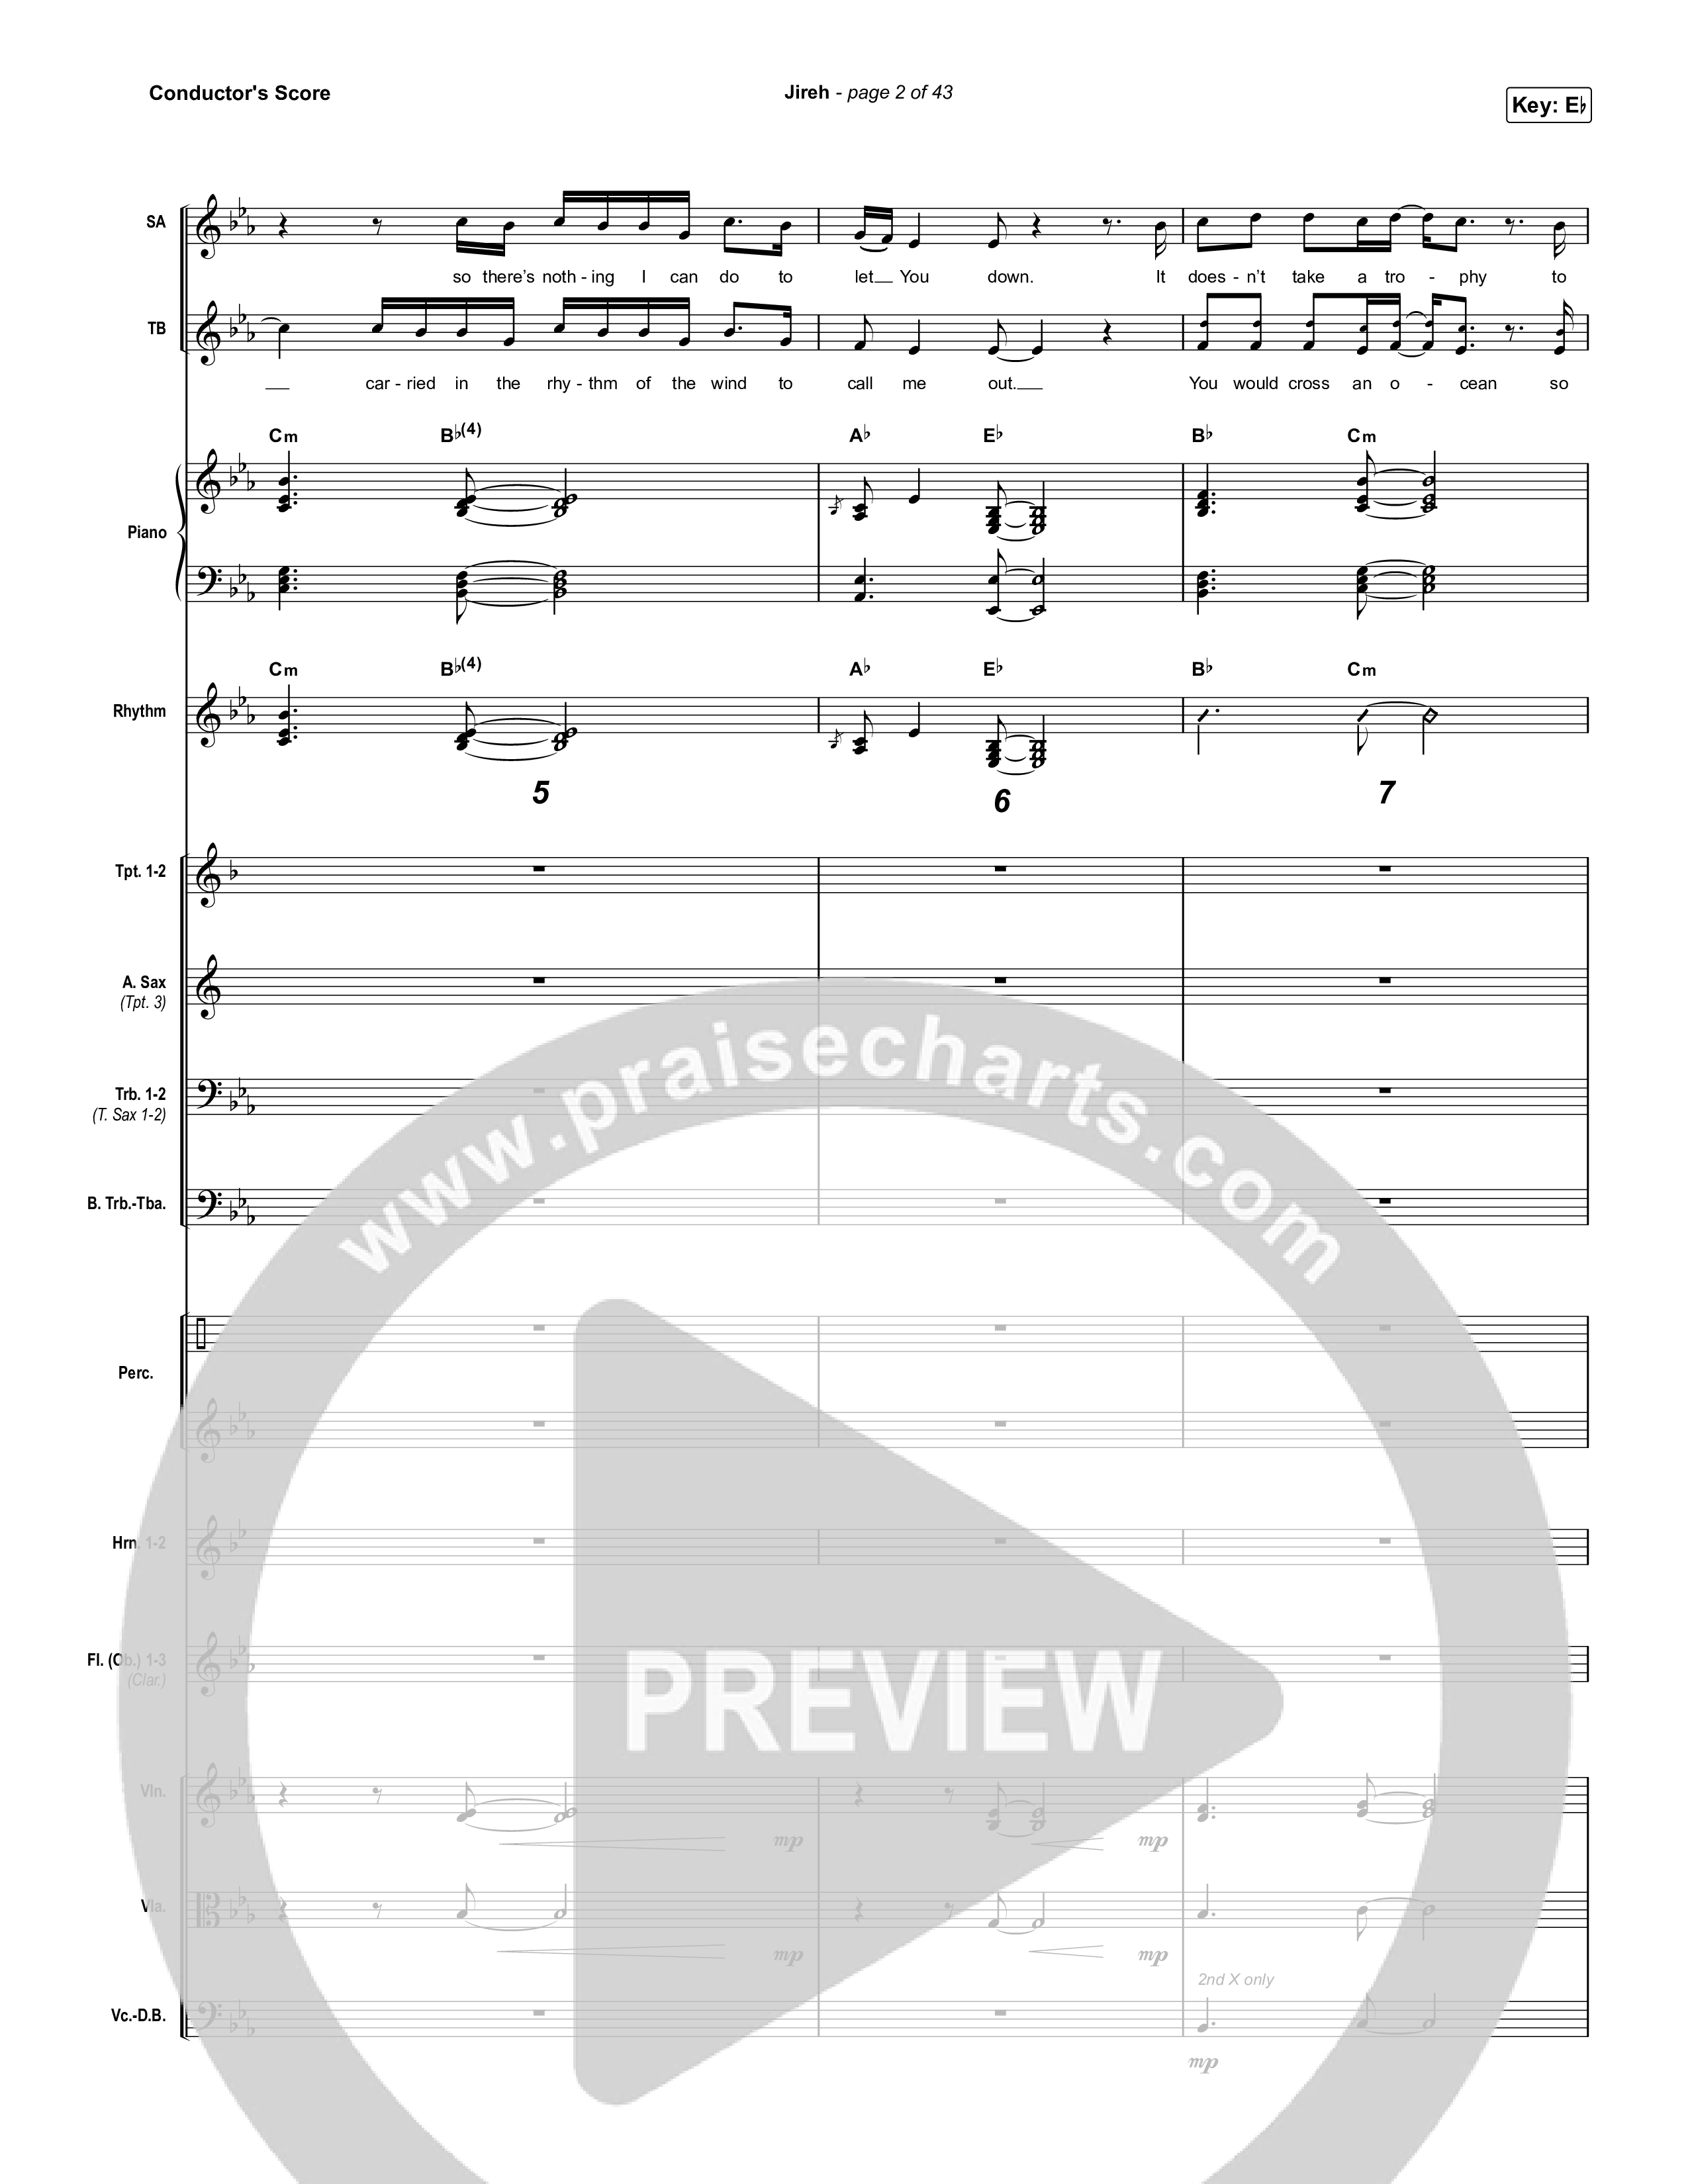 Jireh (Choral Anthem SATB) Orchestration (Maverick City Music / Elevation Worship / Arr. Luke Gambill)